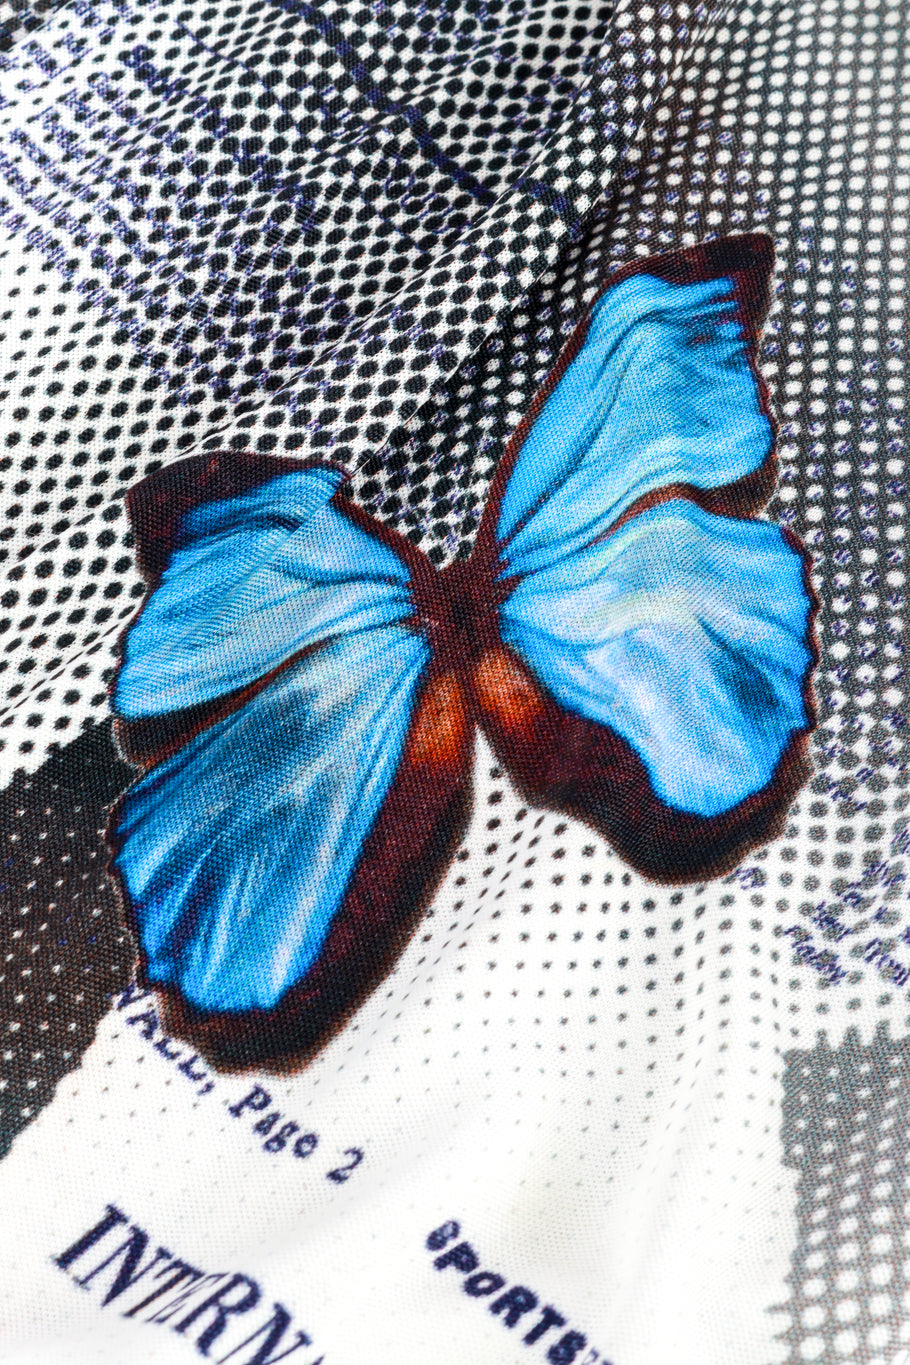 Vintage John Galliano Butterfly Newspaper Print Dress butterfly print closeup @recess la